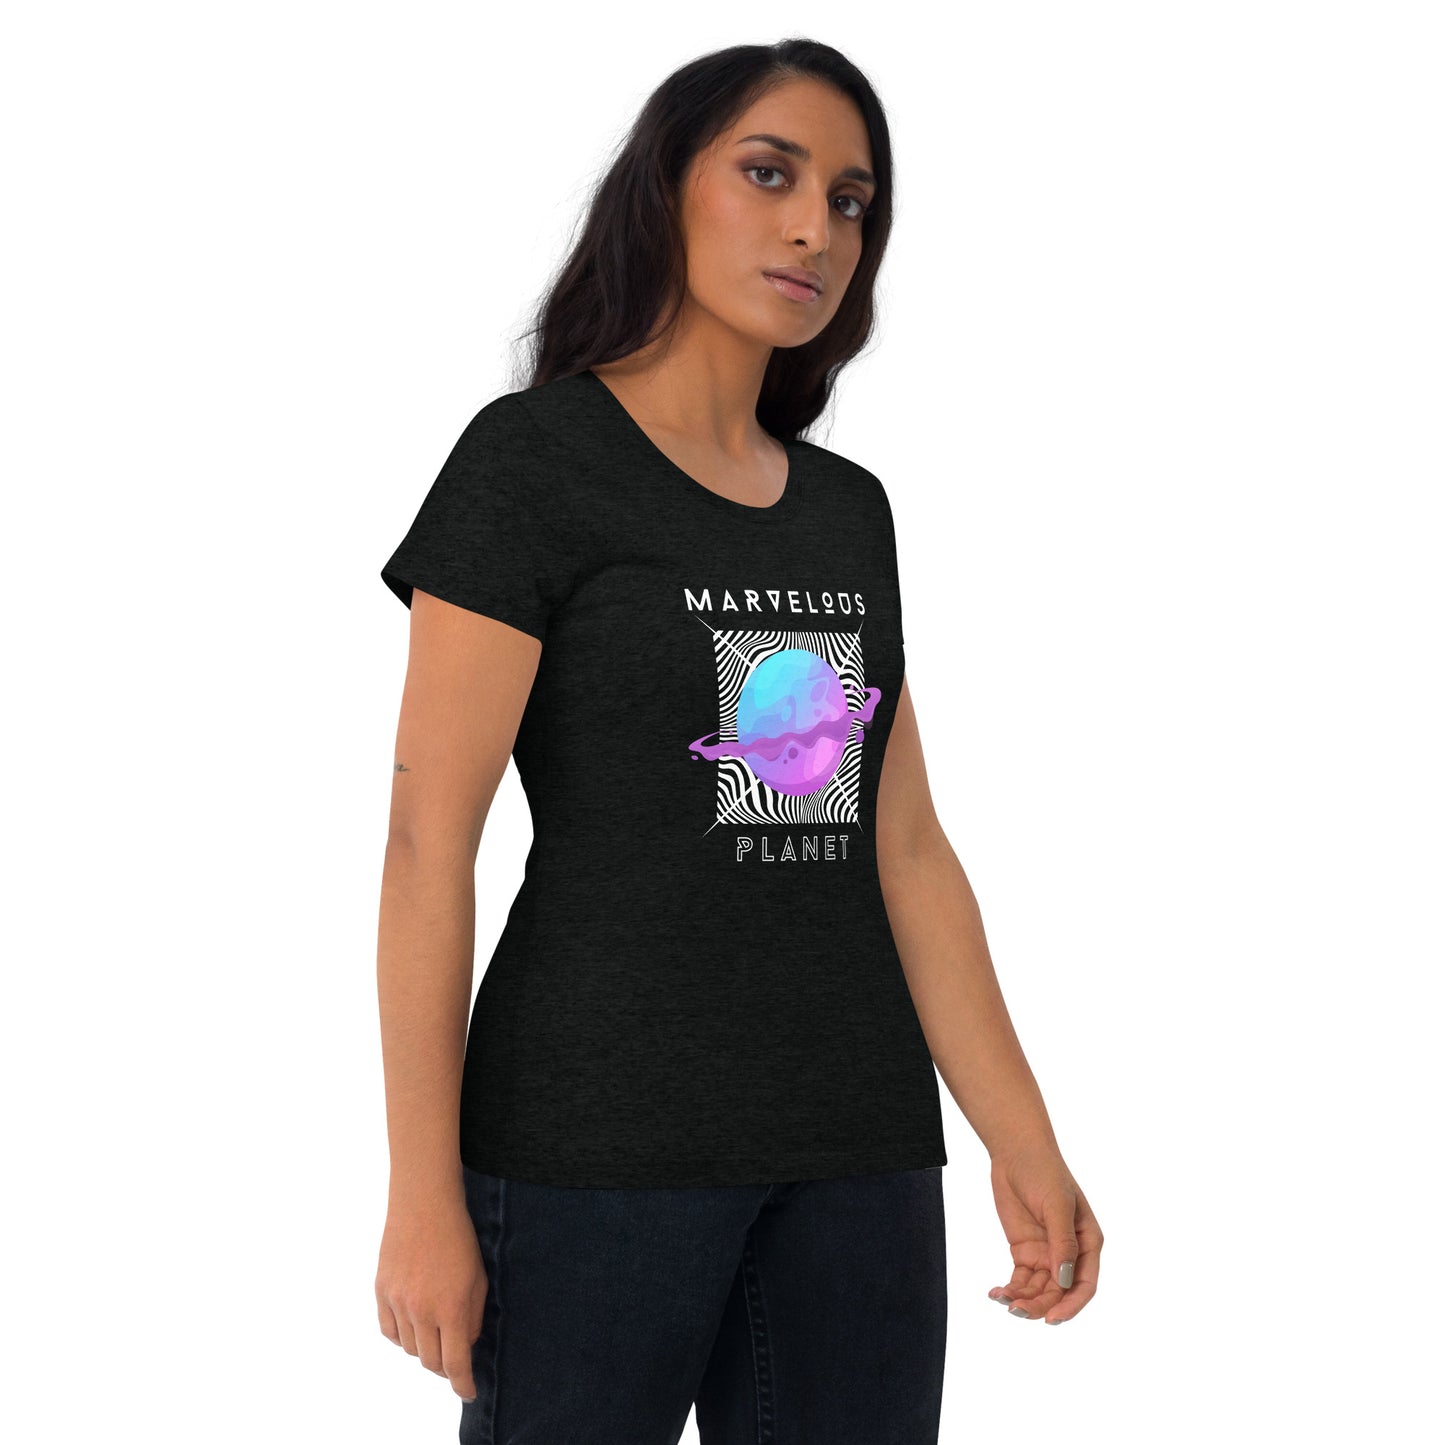 T-shirt Marvelous Planet